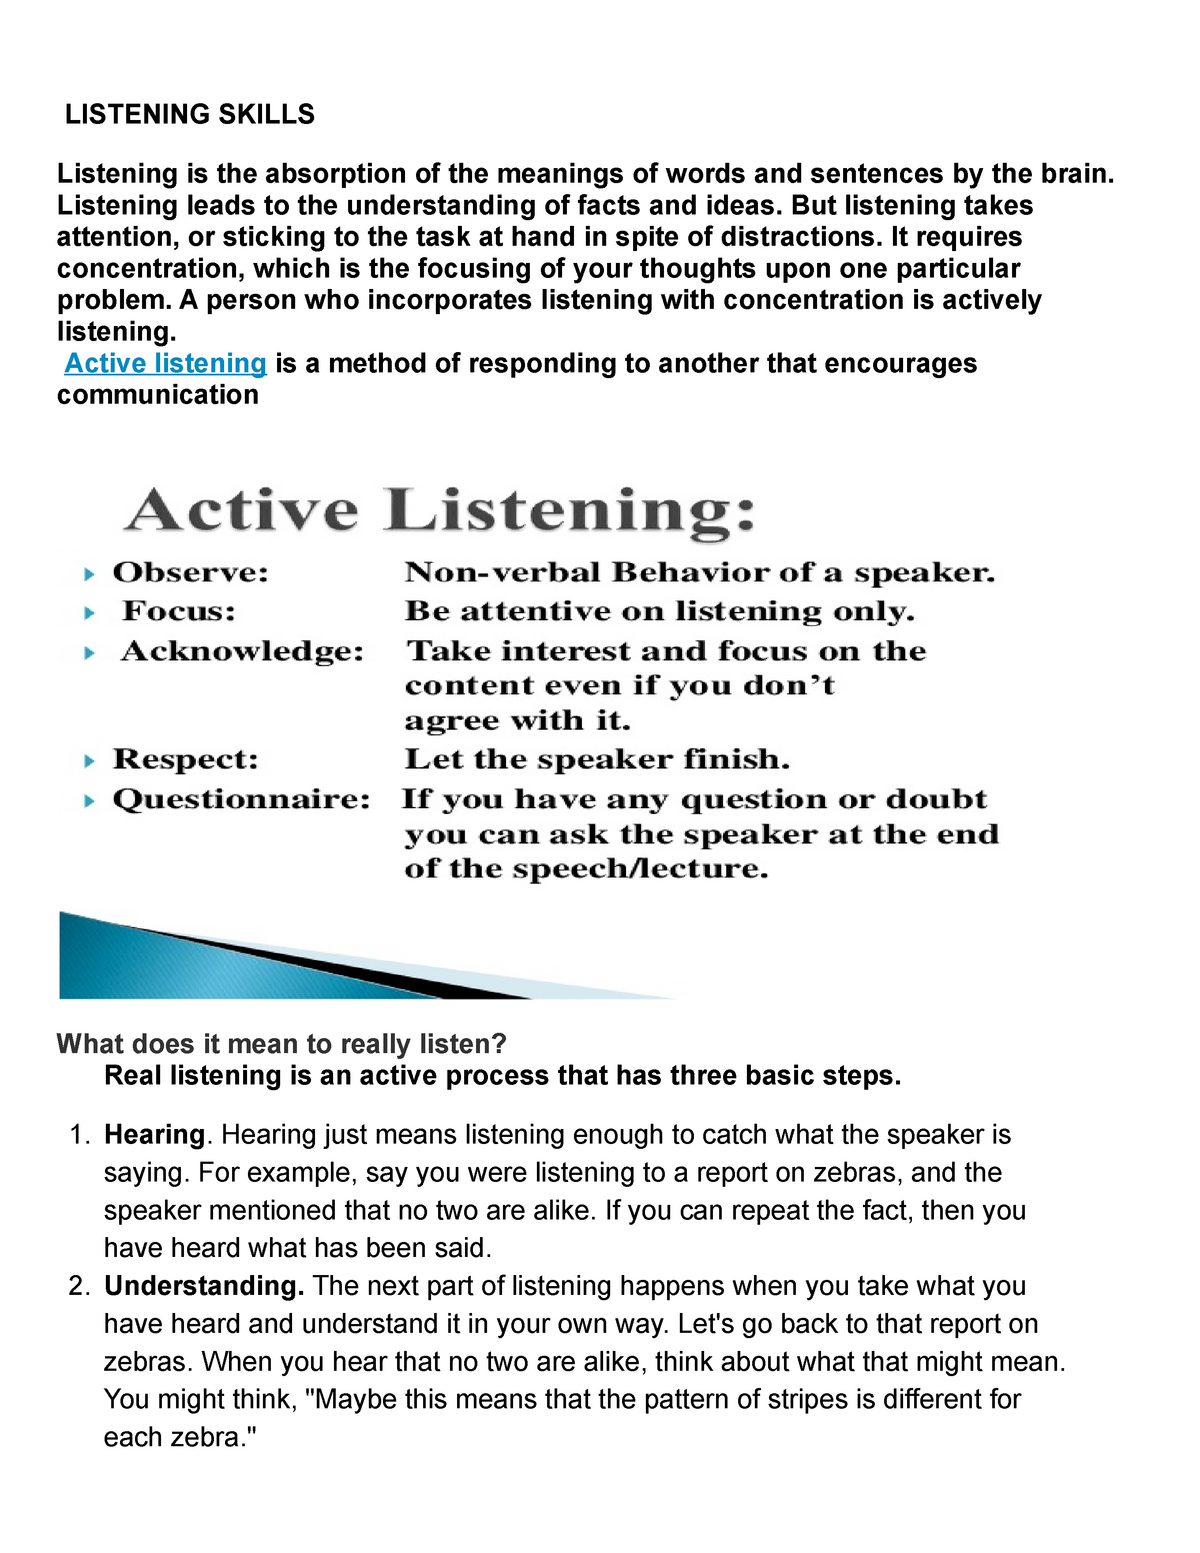 write and essay on listening skills